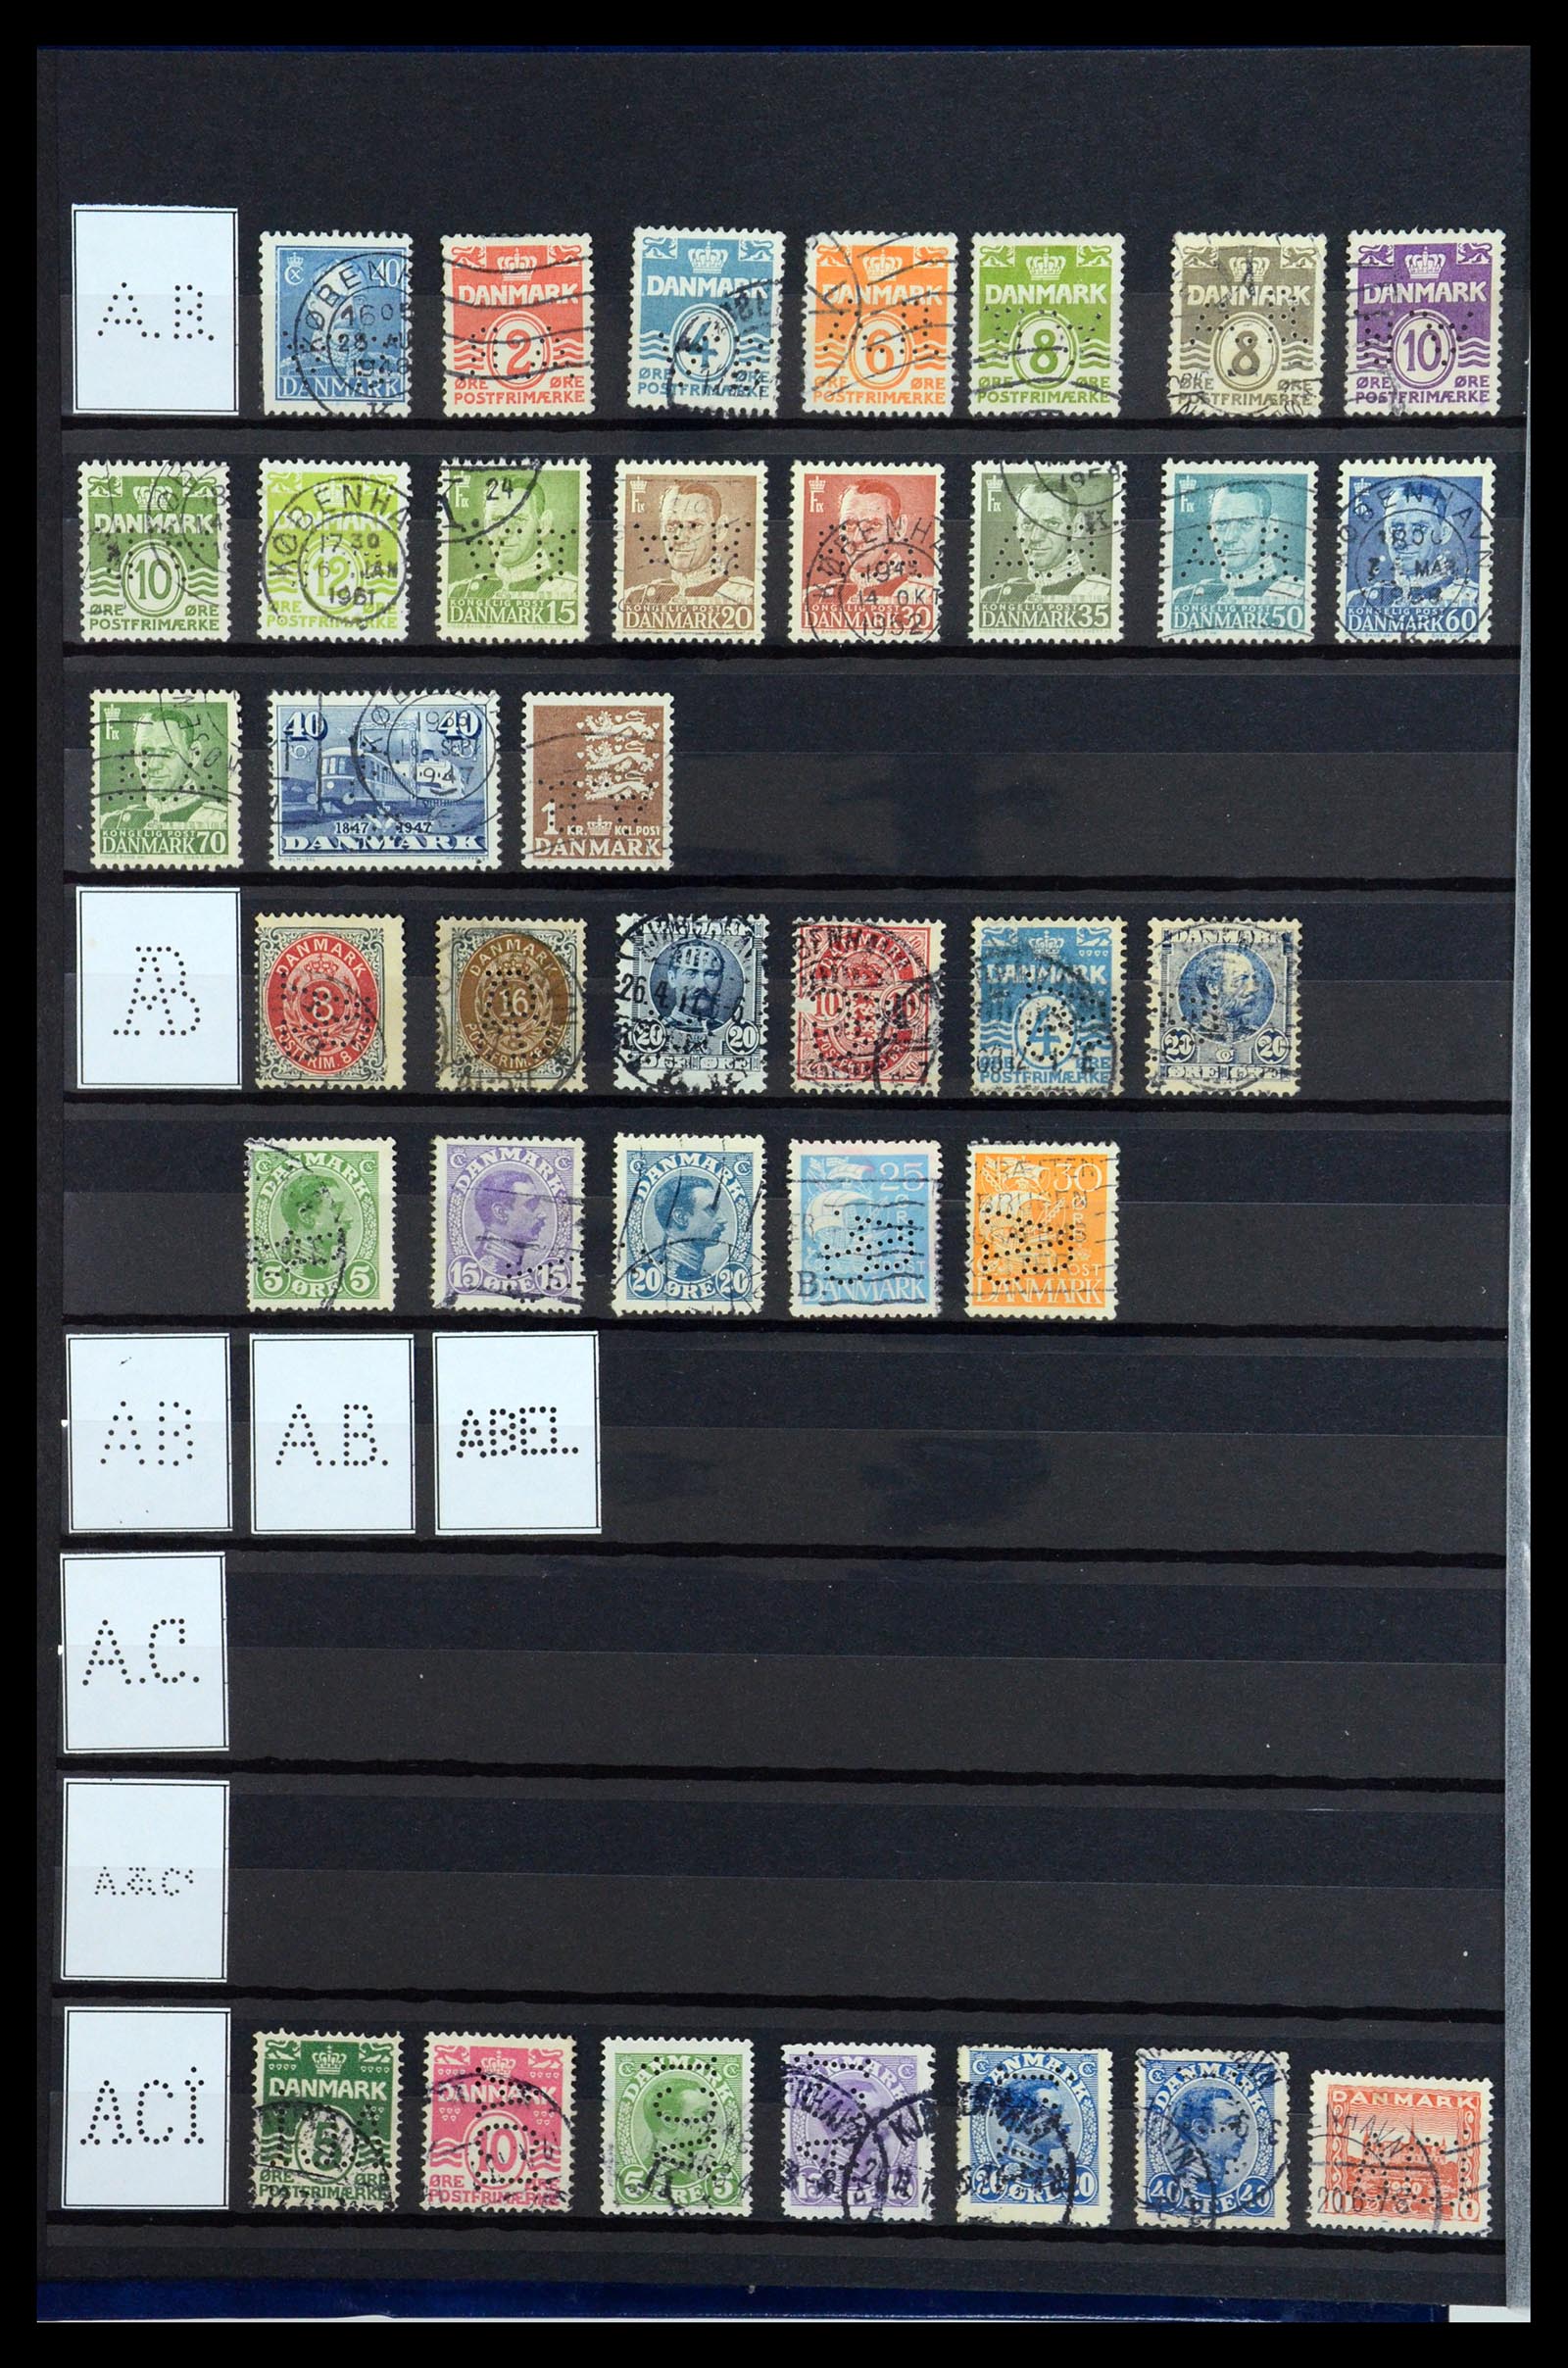 36396 002 - Stamp collection 36396 Denmark perfins.